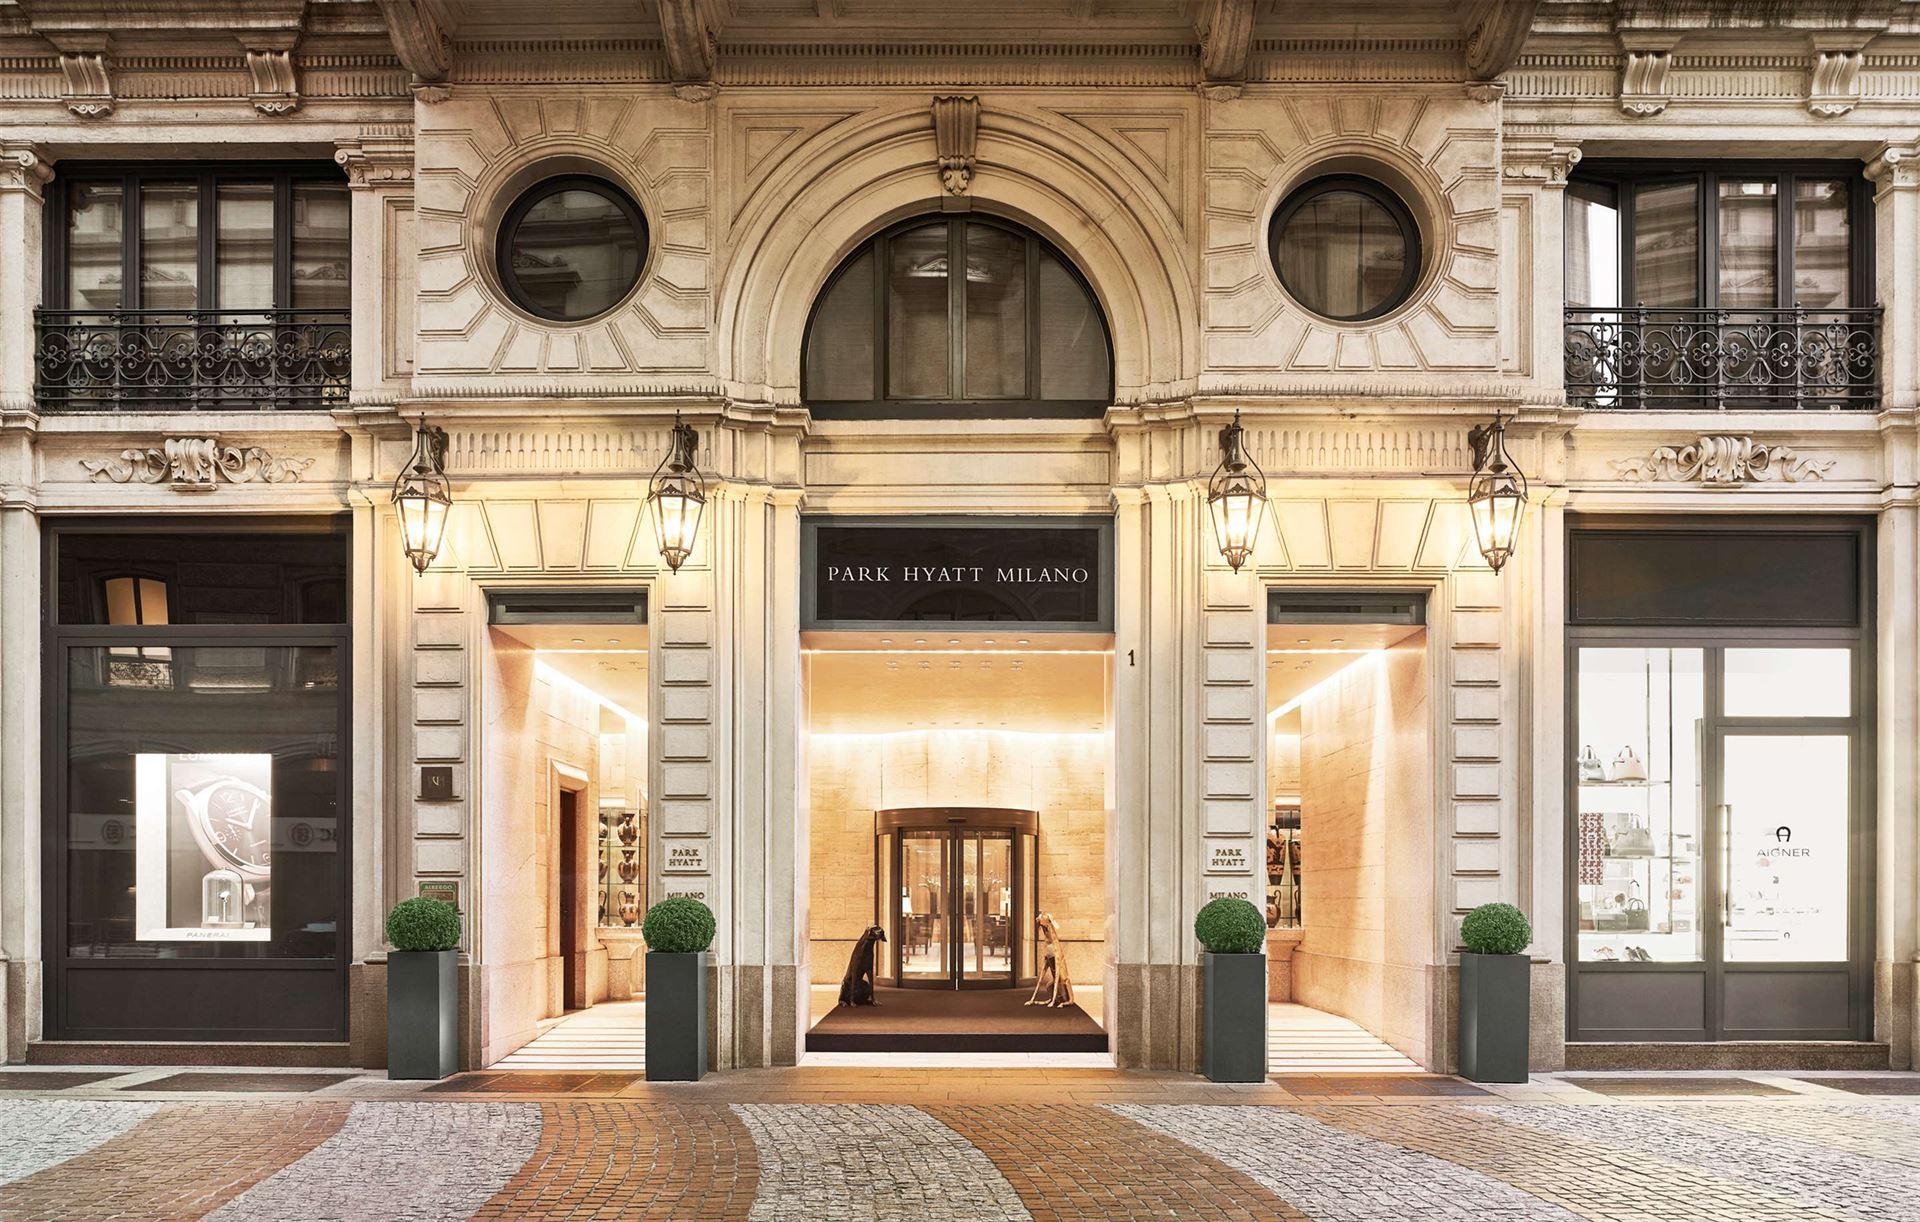 Park Hyatt Milano luxe hotel deals